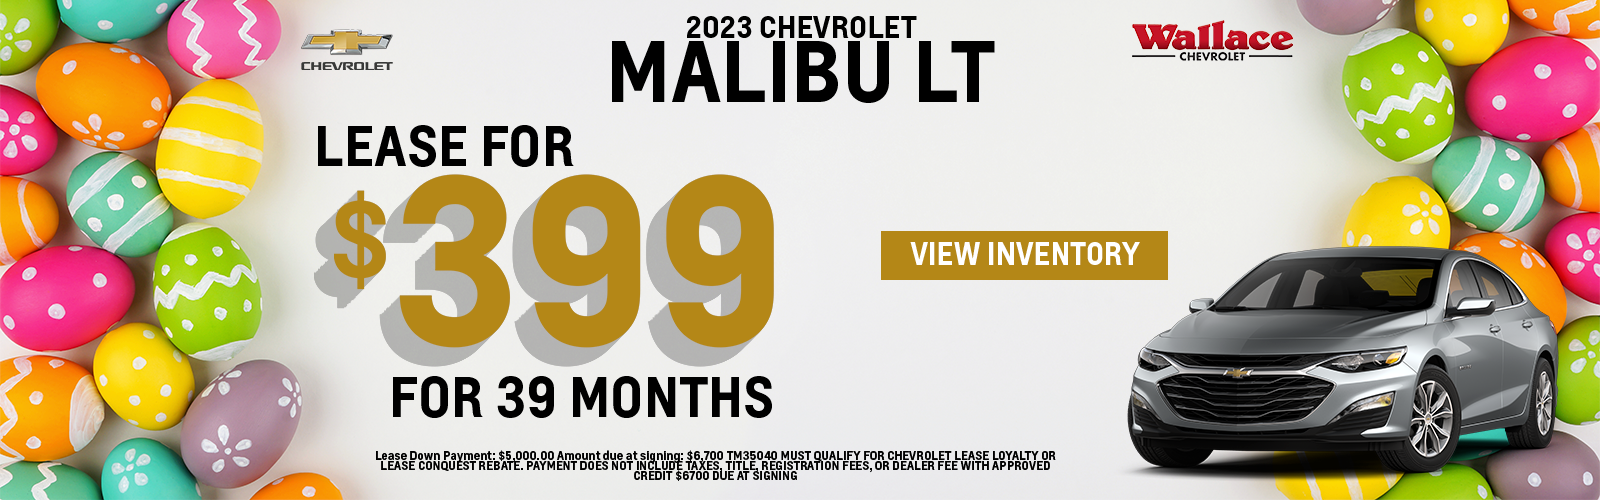 Chevy Malibu Special Offer